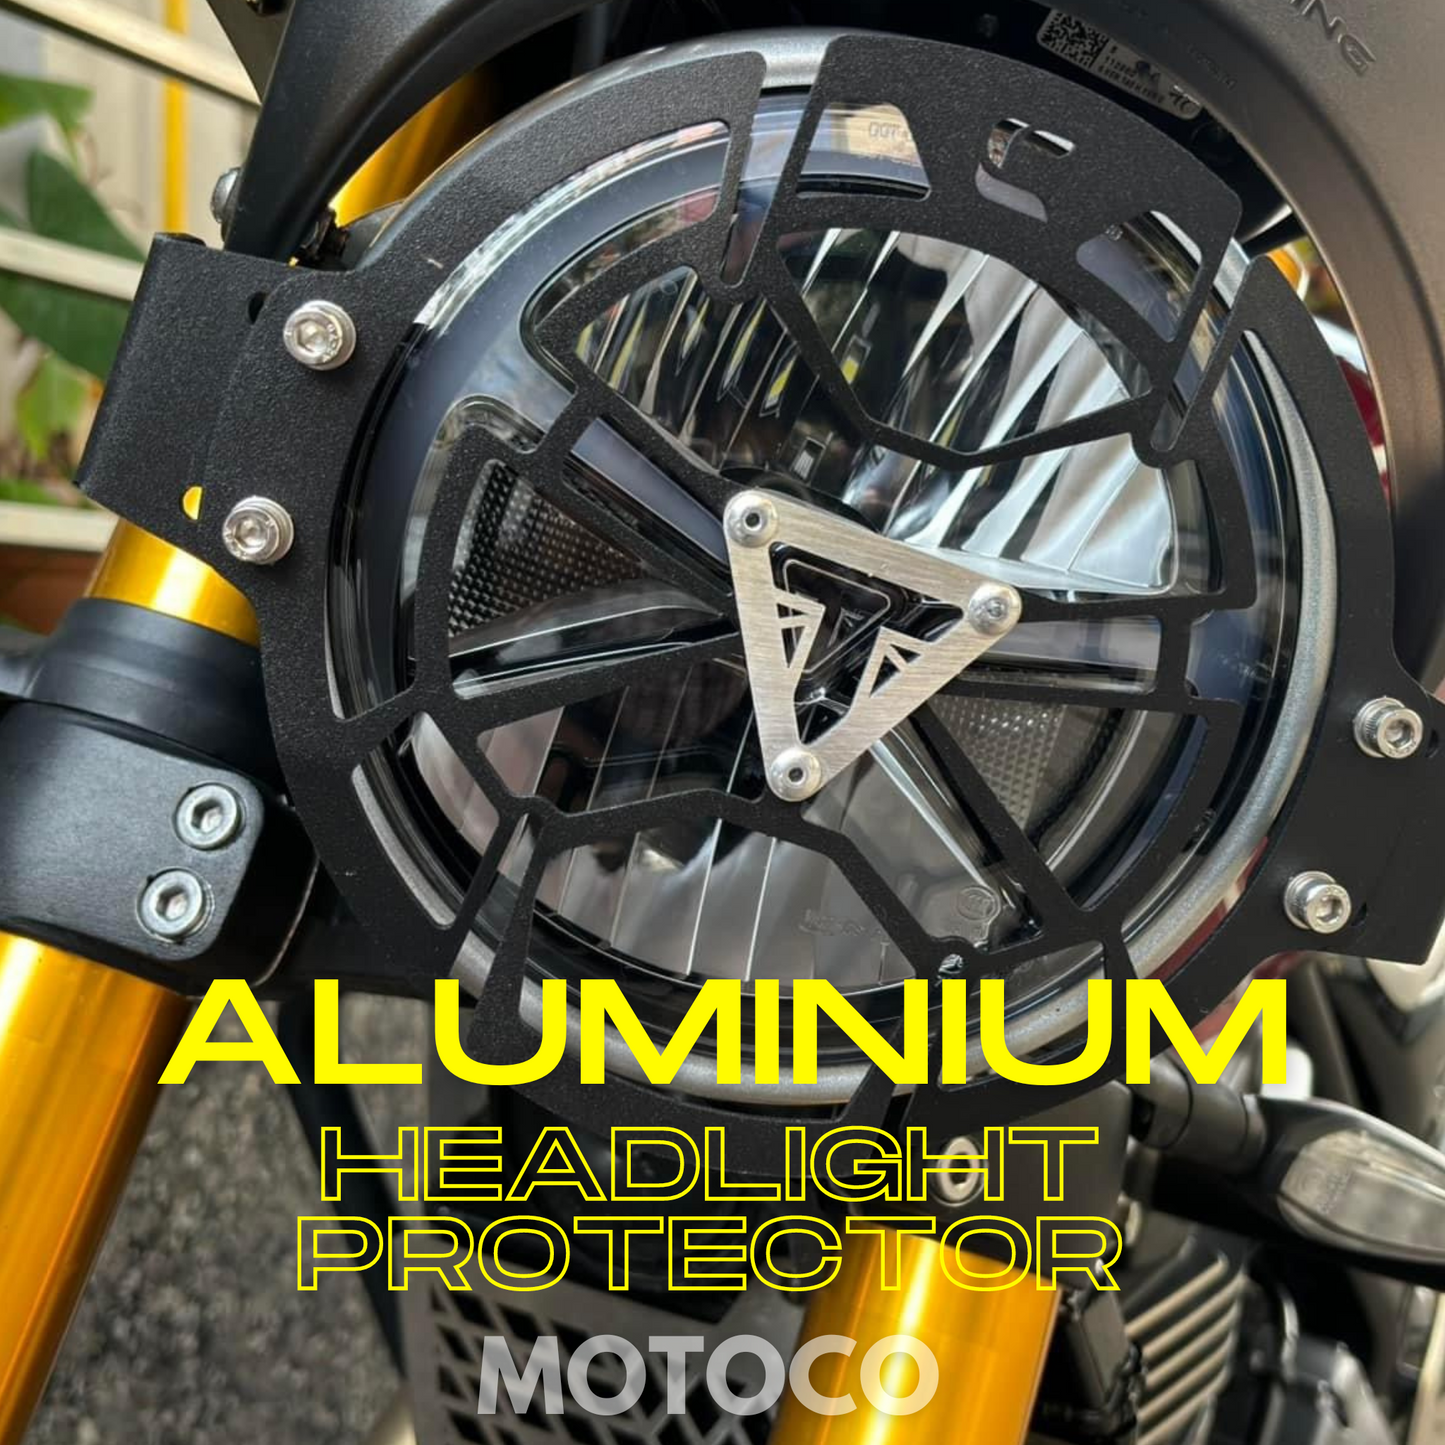 Headlight Protector For Triumph Speed 400 & Scrambler 400 X